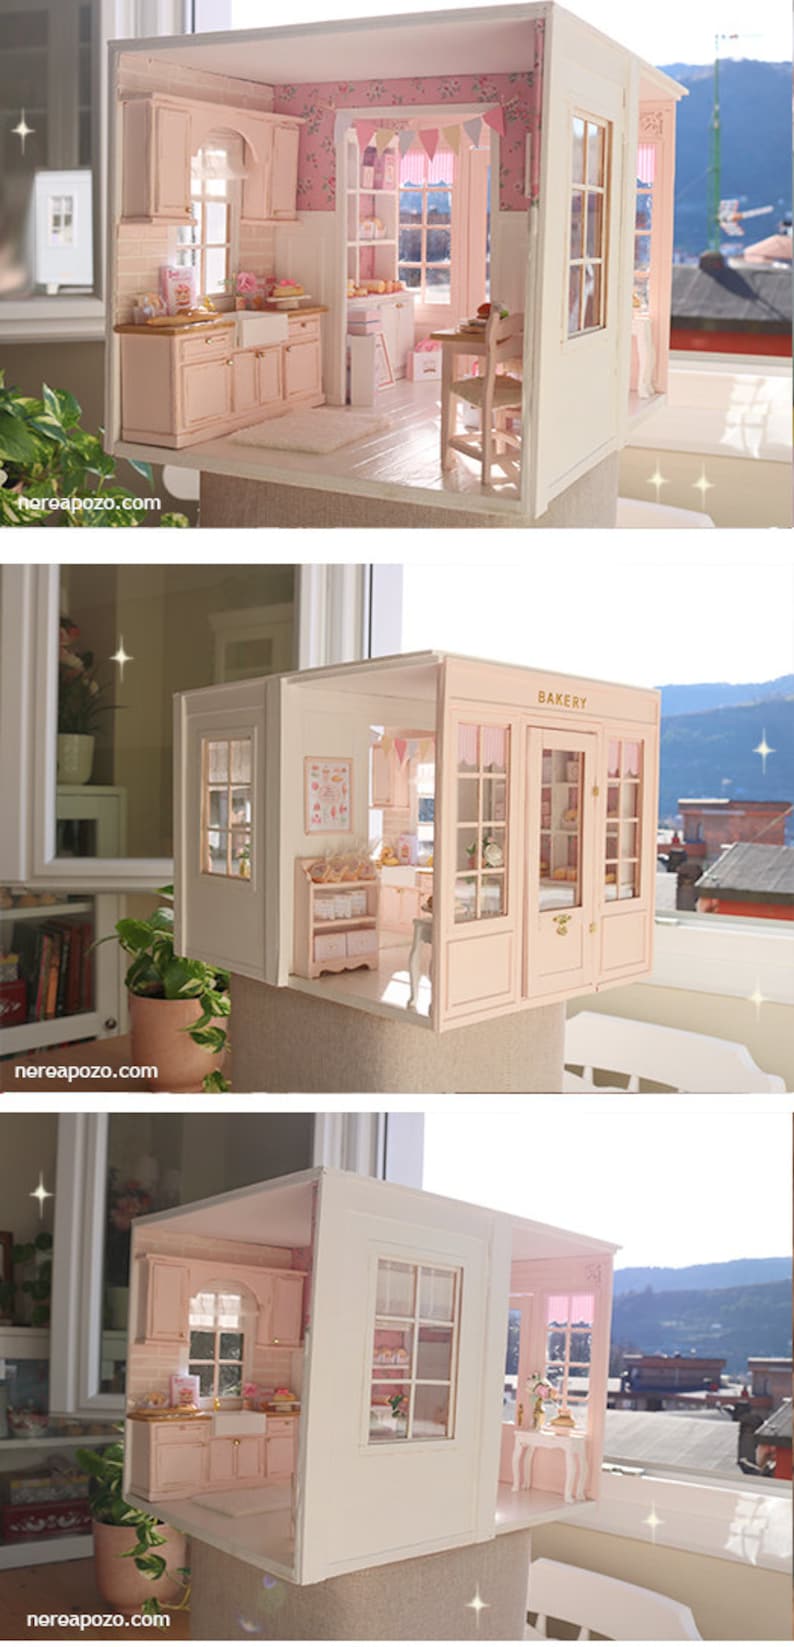 Roses Bakery cottage 1/10 miniature dollhouse diorama handmade image 2